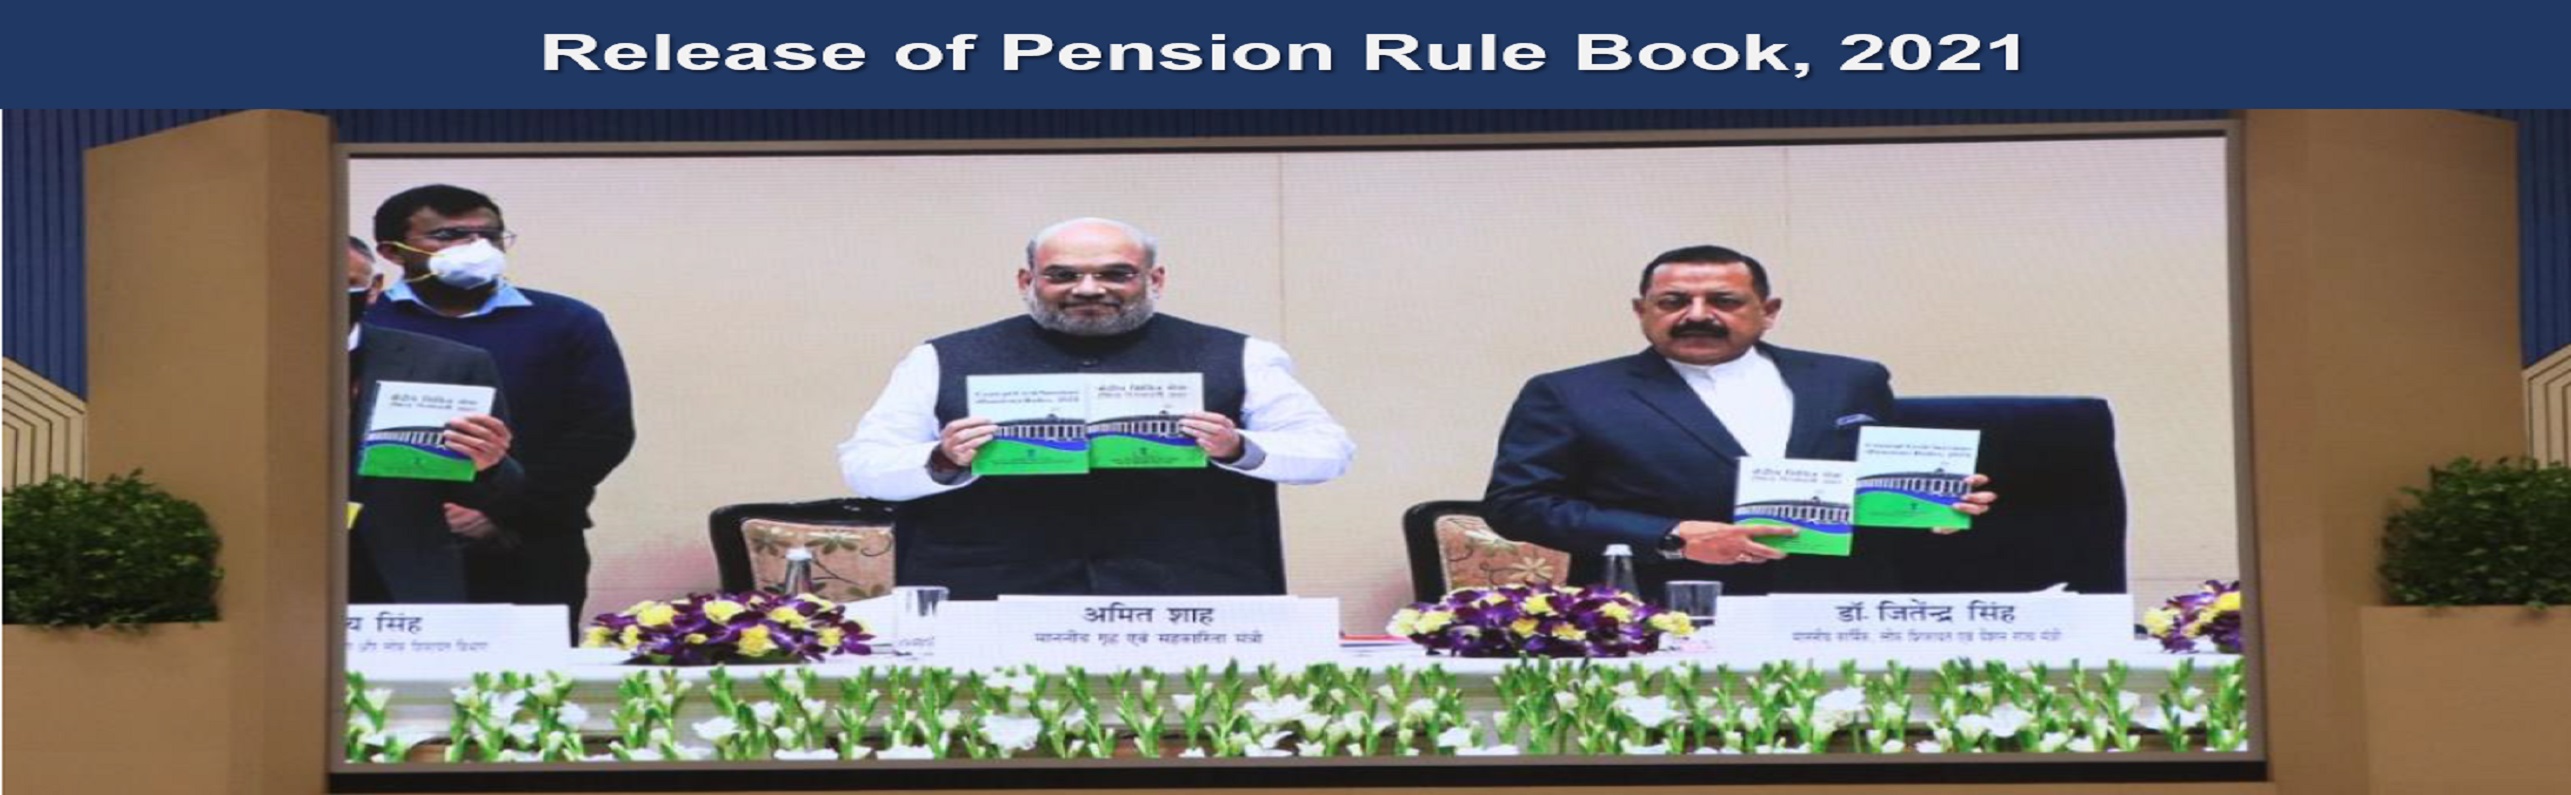 Pension Rule Book, 2021 Release